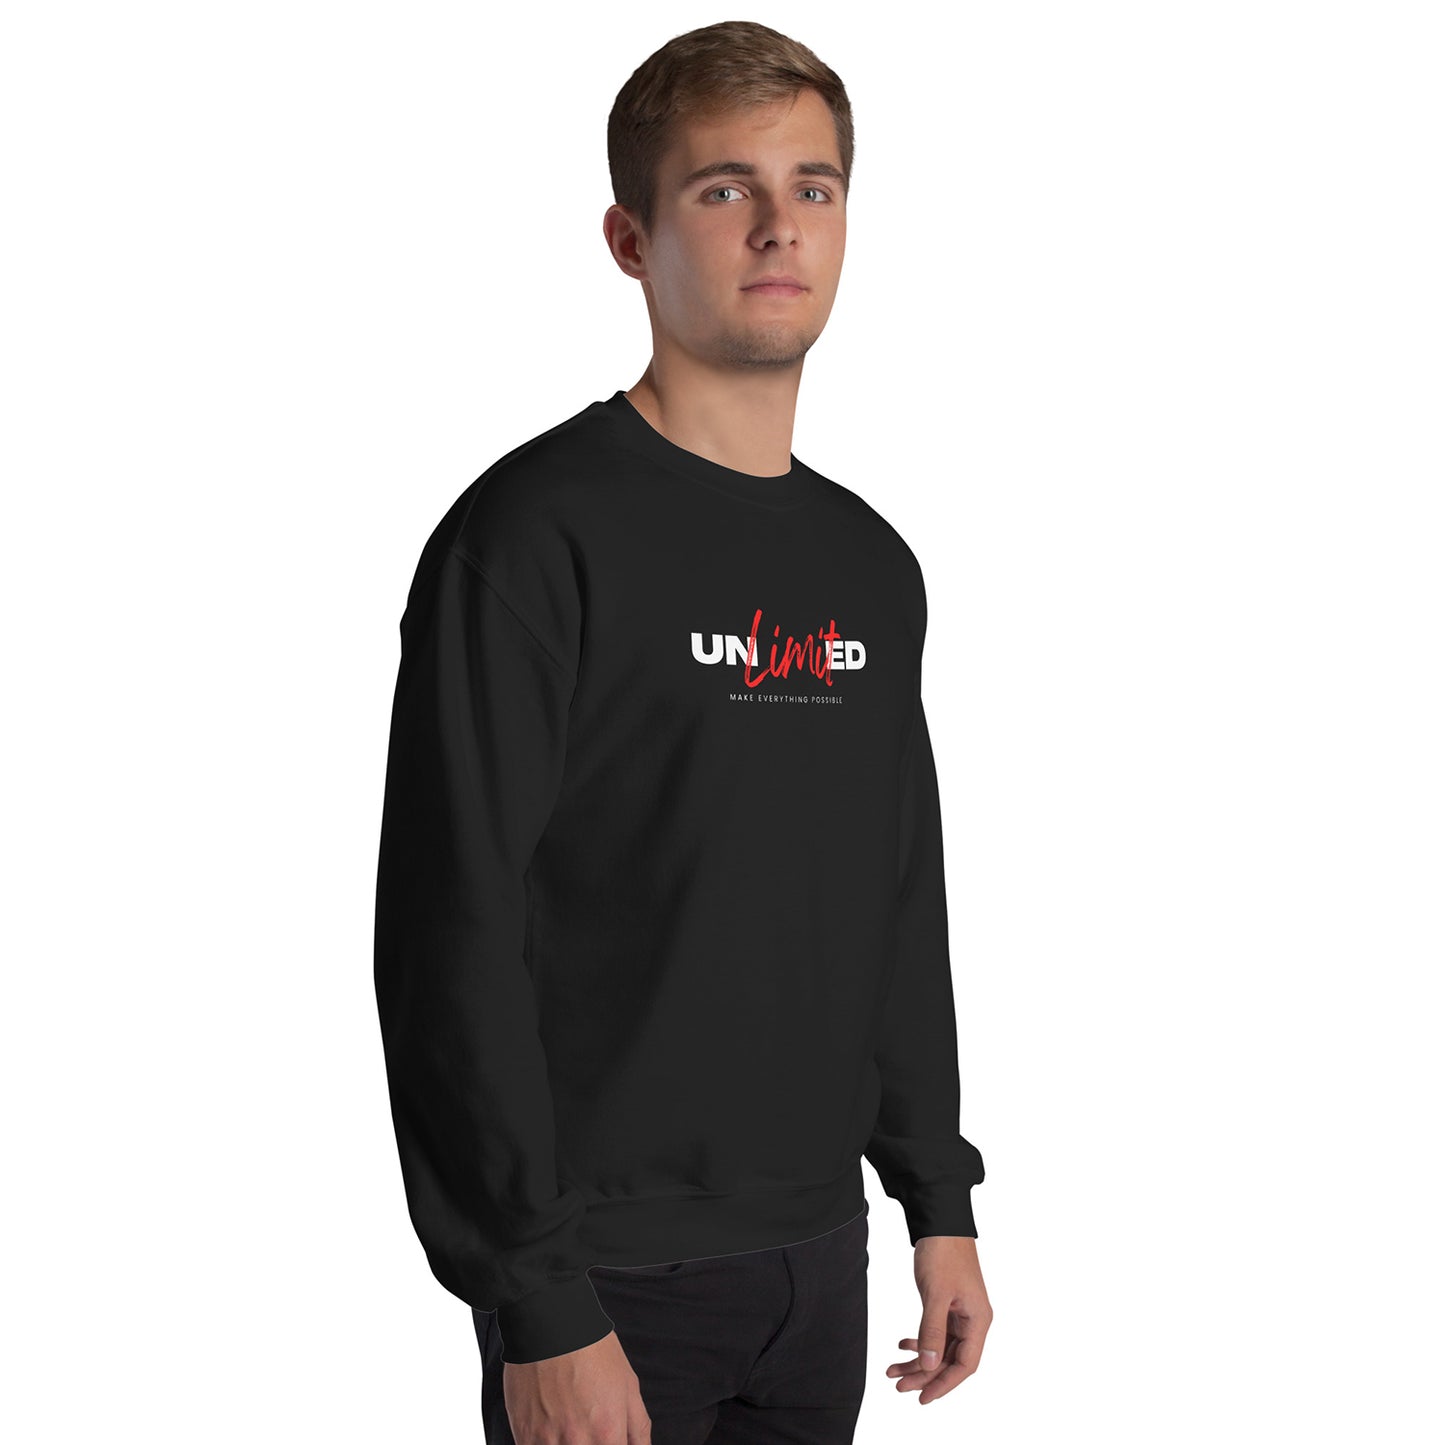 Unlimited Printed Cotton Men's Sweatshirt